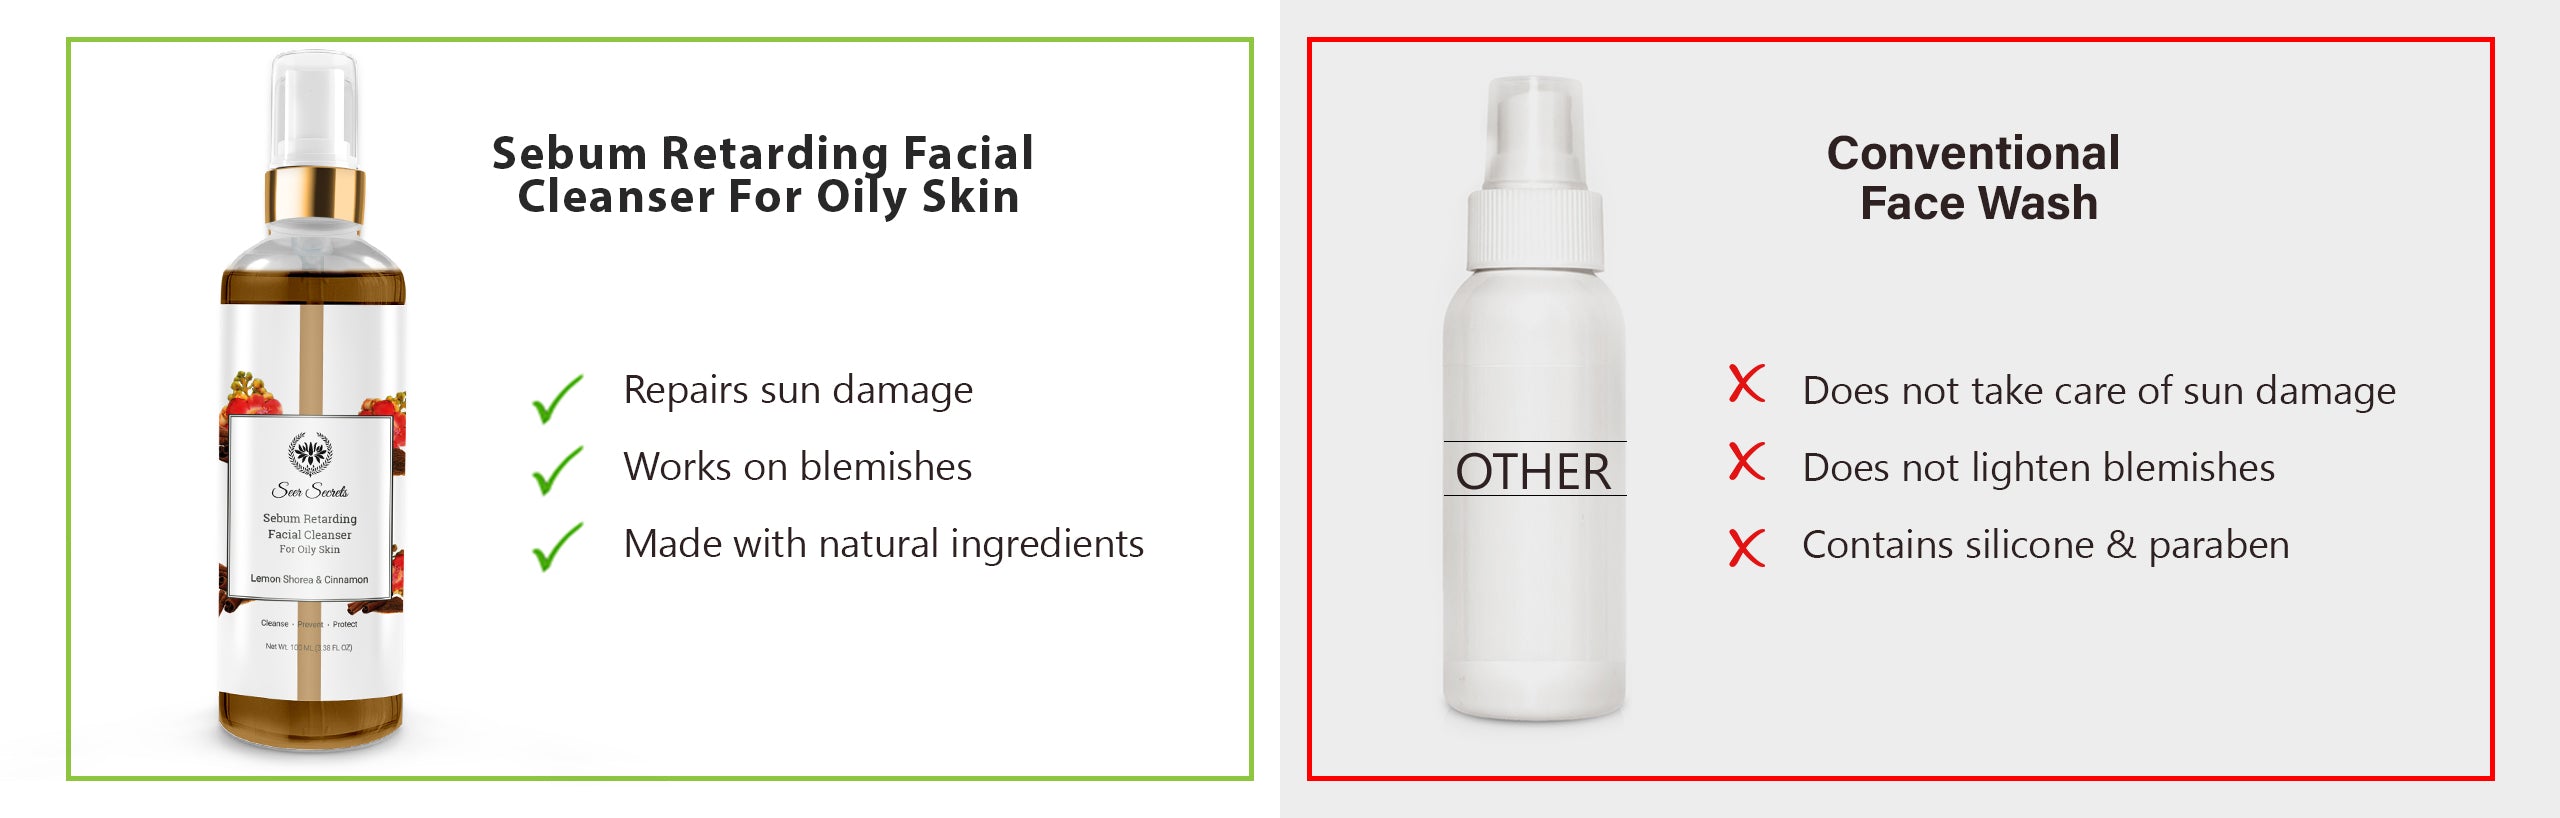 Sebum retarding facial cleanser vs conventional face wash